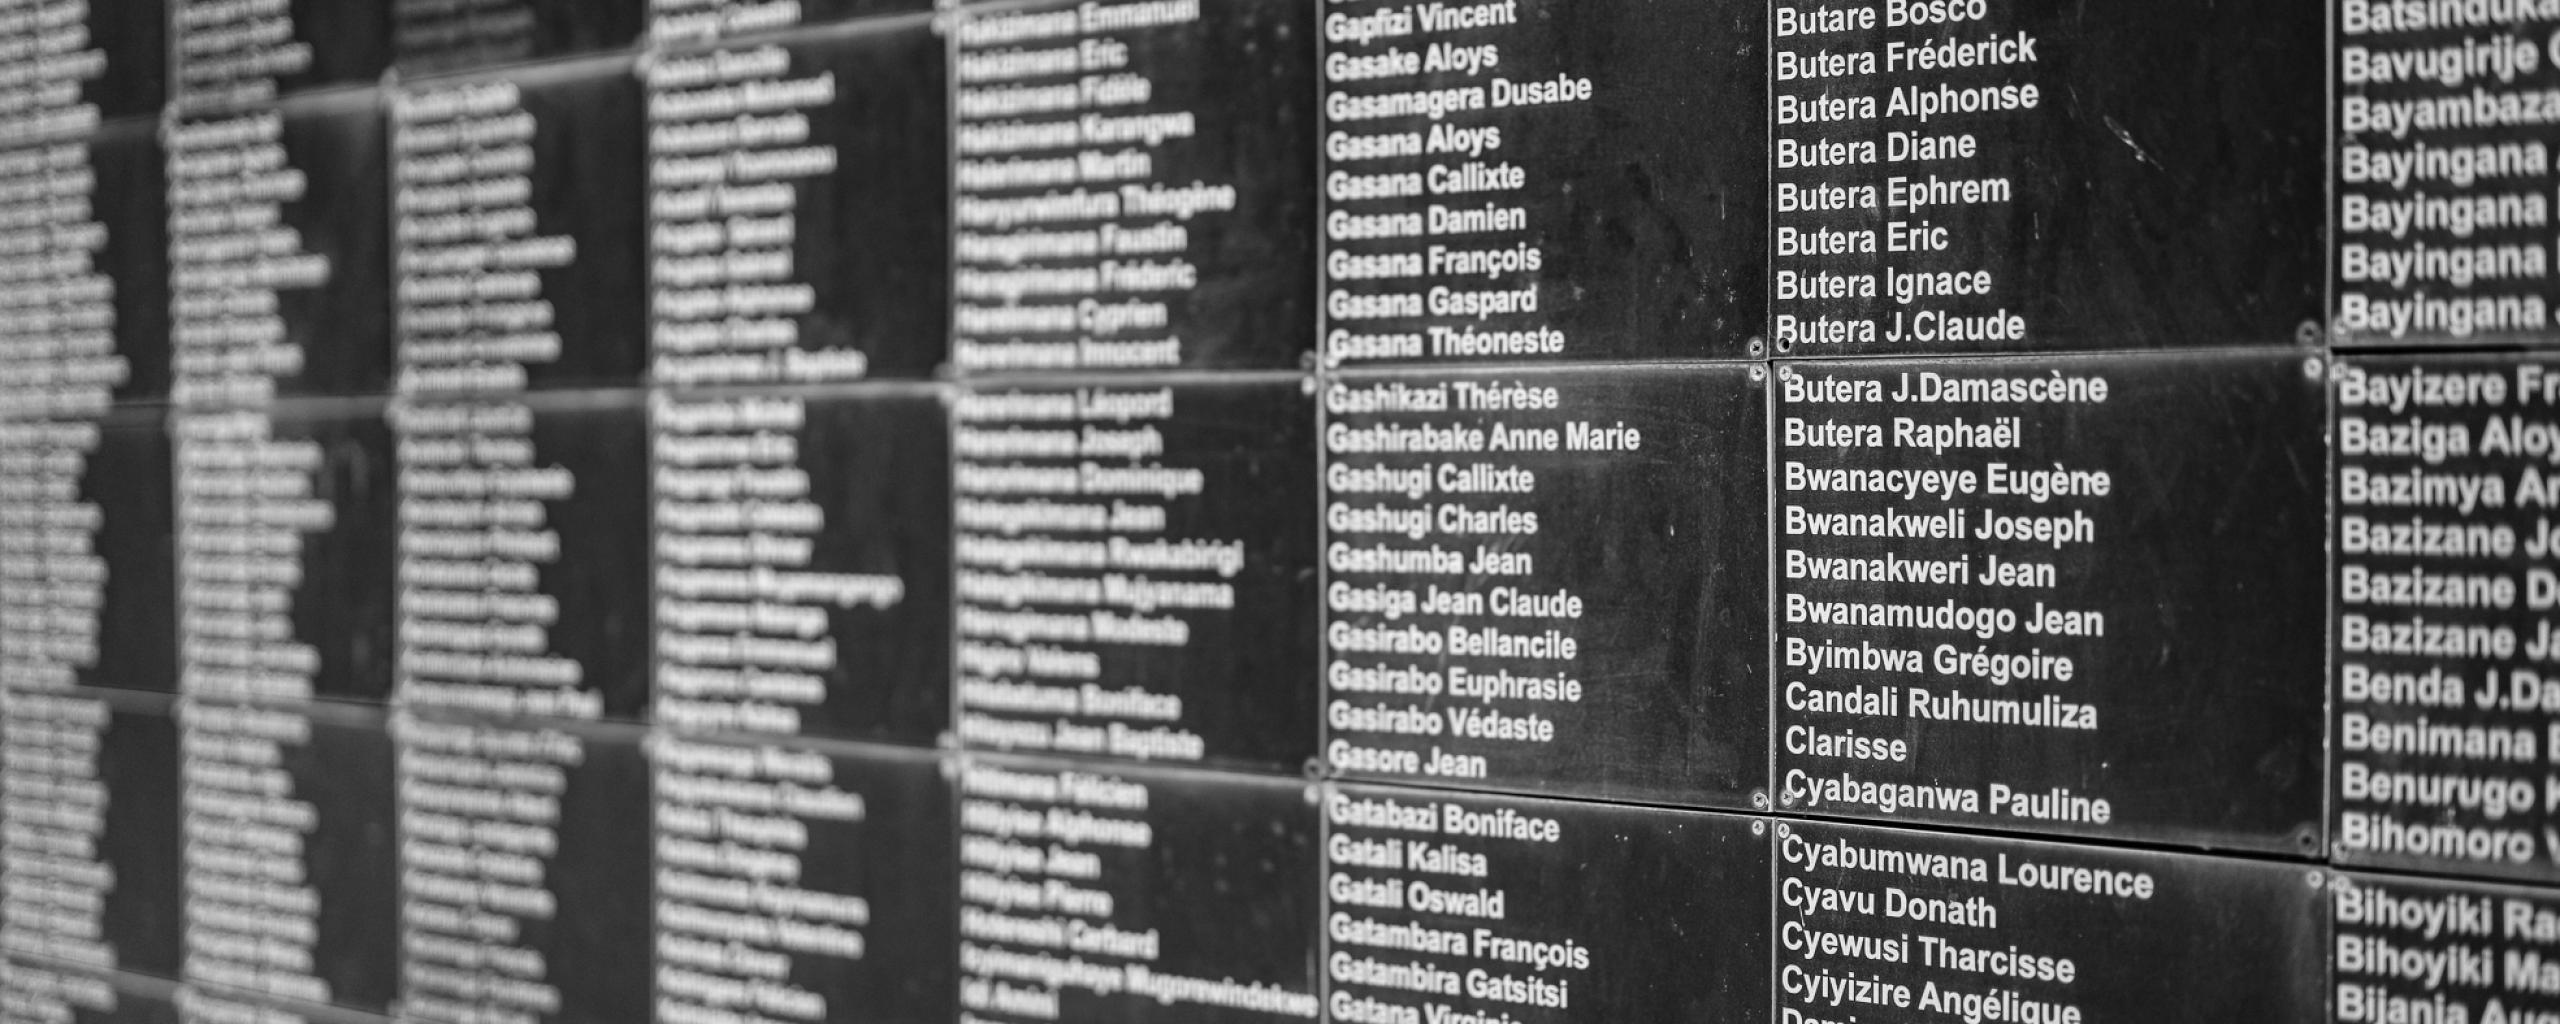 Kigali Genocide Museum